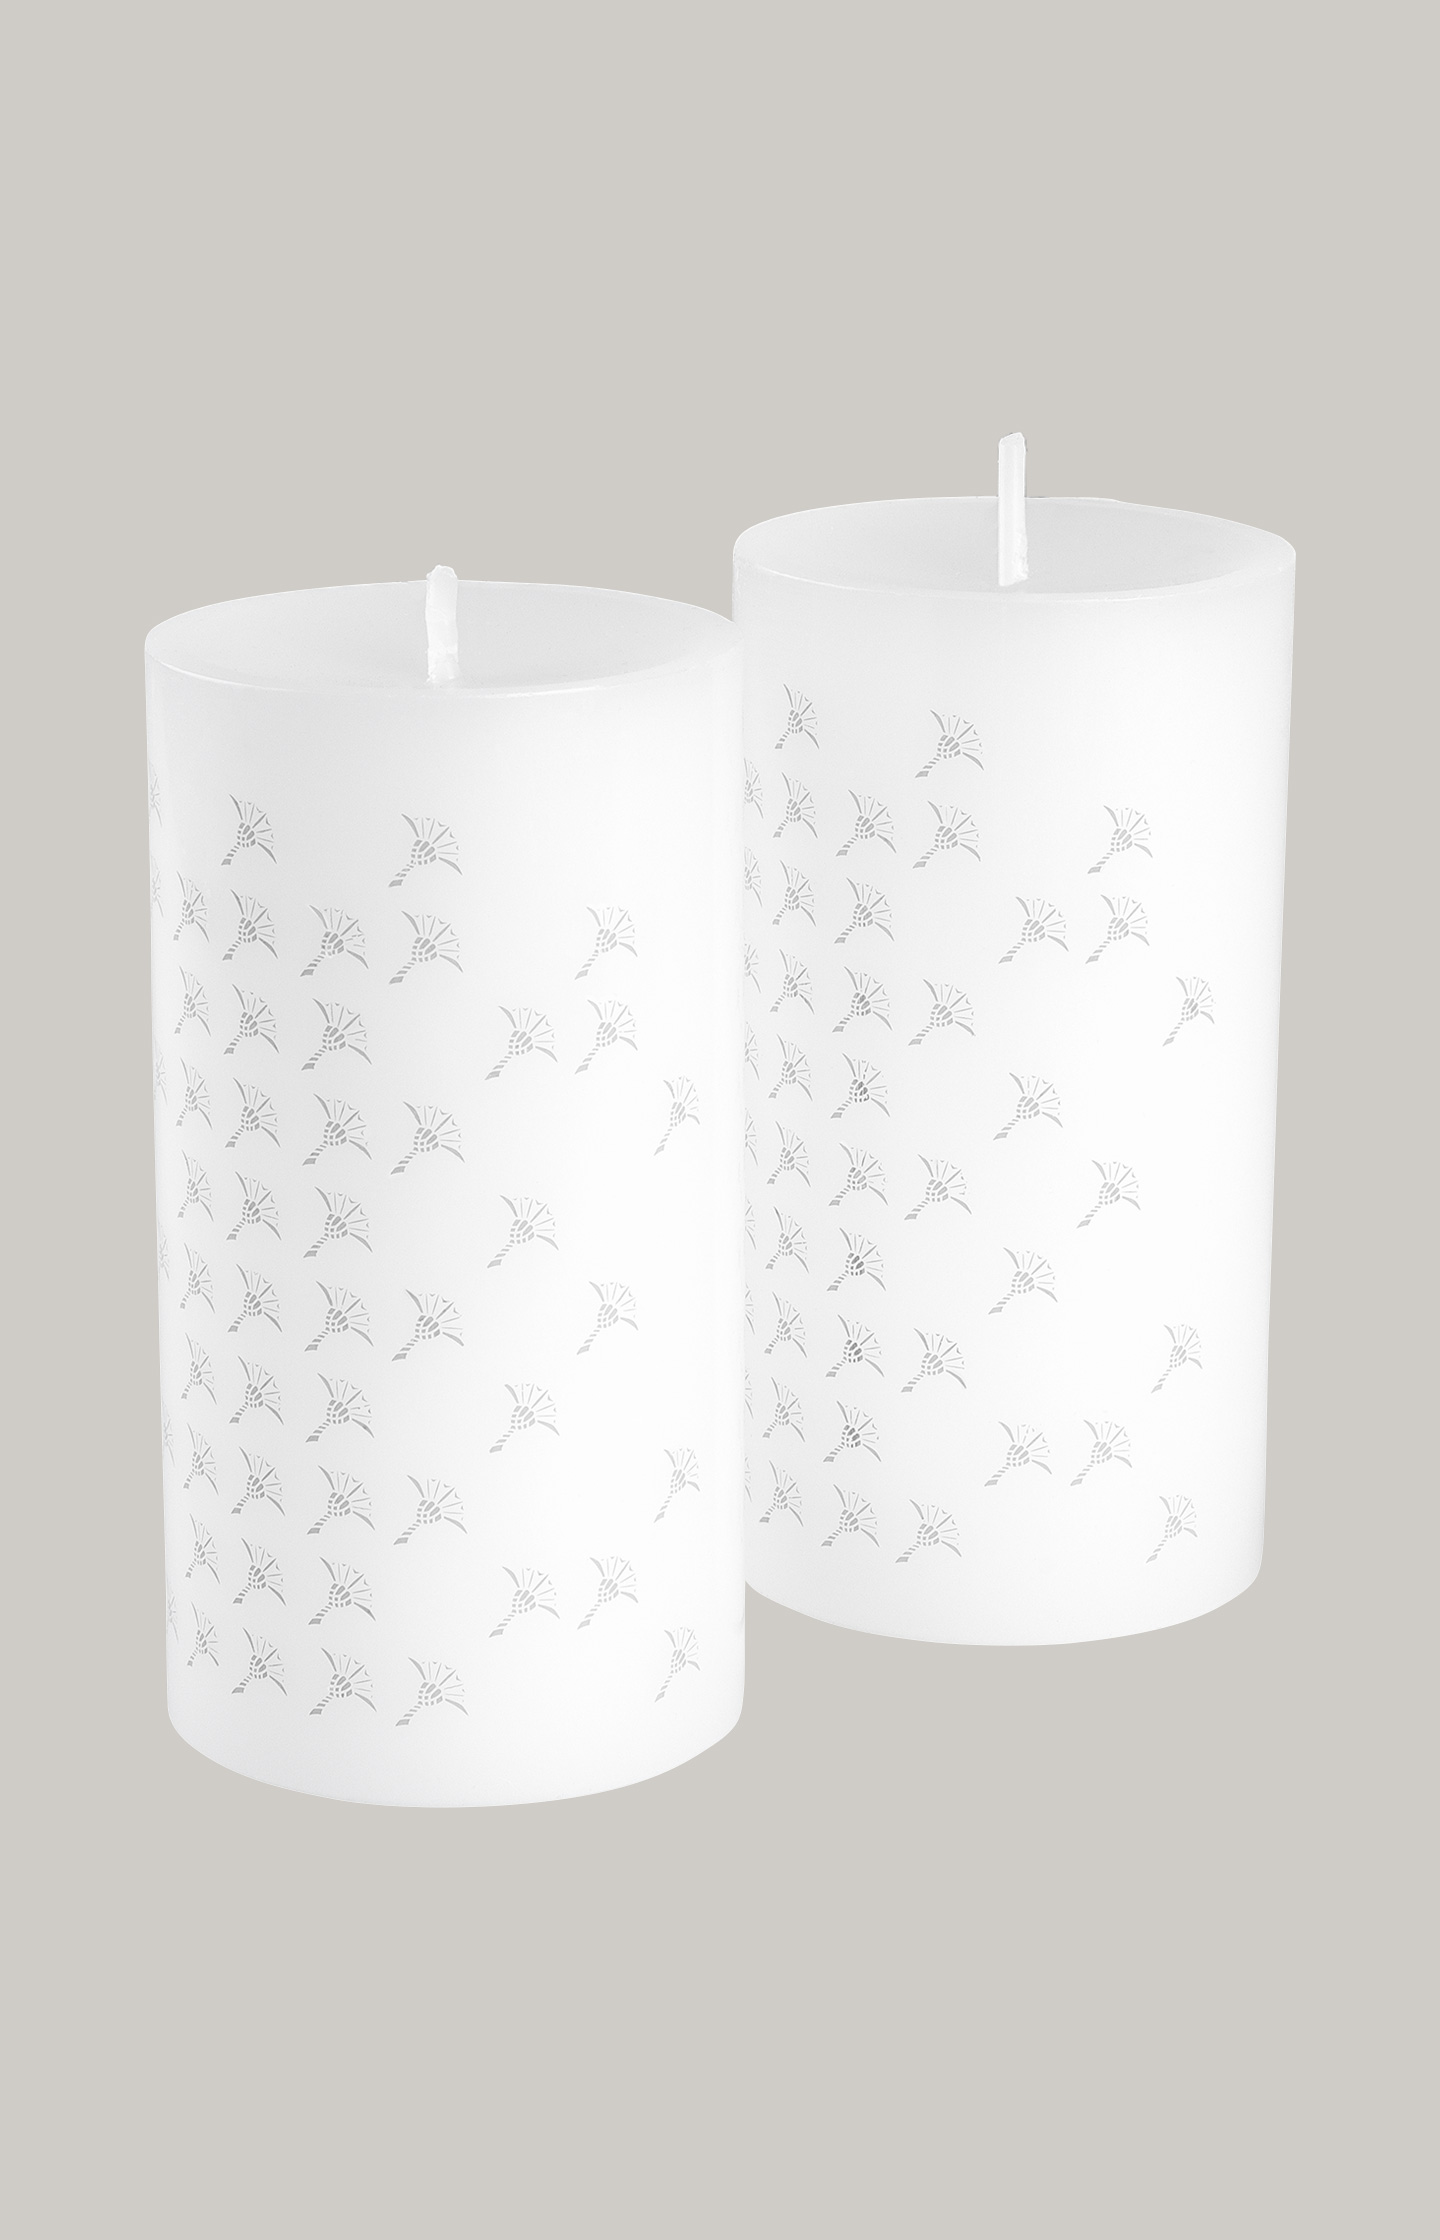 New JOOP! FADED CORNFLOWER pillar candle in white - set of 2, 15 cm tall -  in the JOOP! Online Shop | Schüsseln